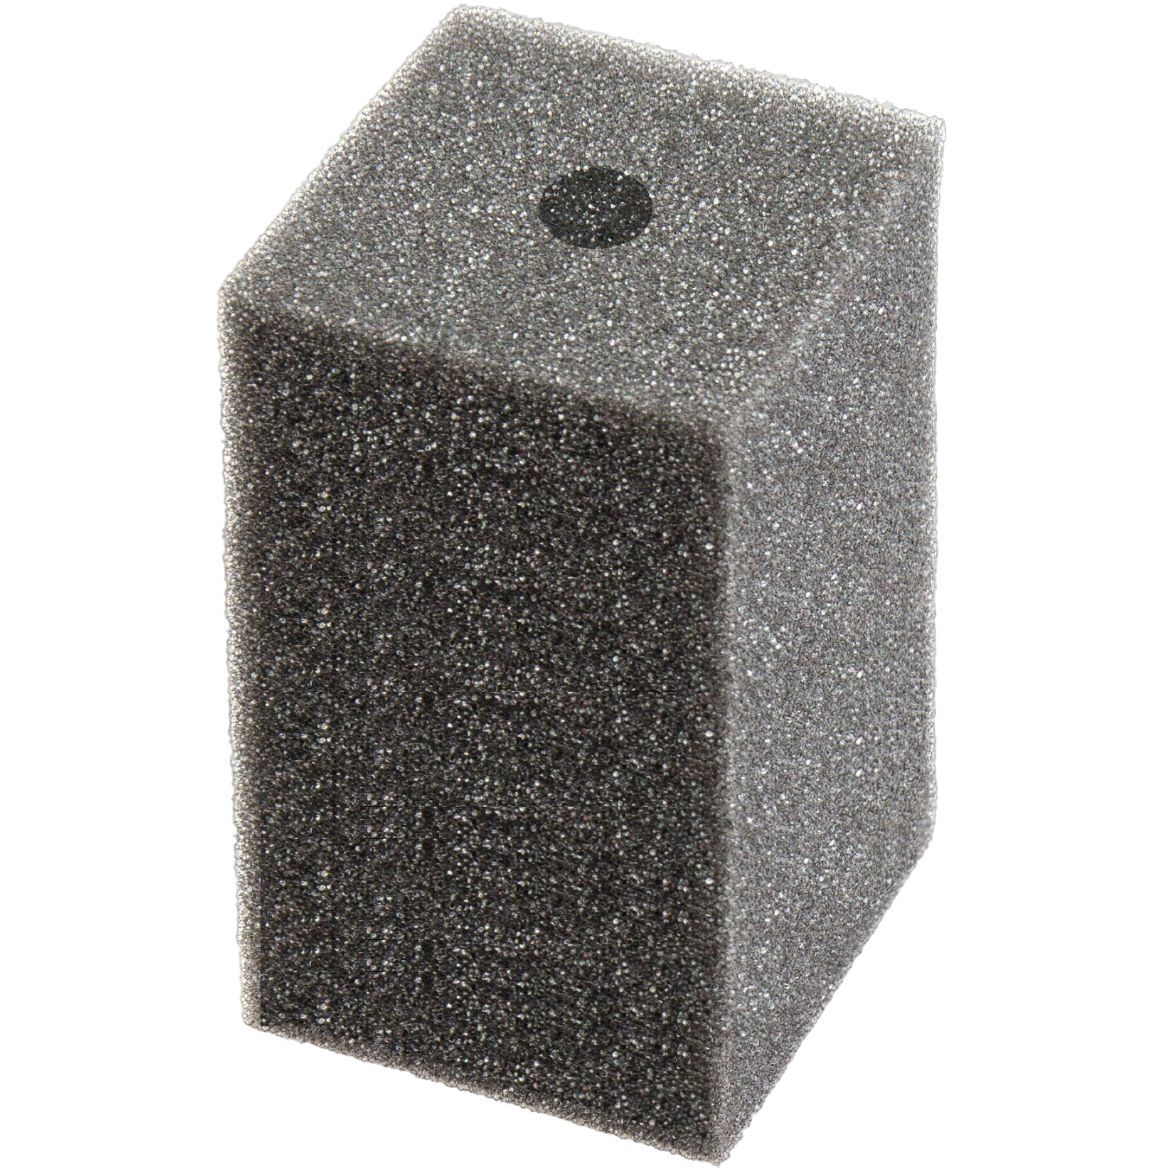 Мочалка Filter sponge Ukr, пряма крупнопориста, 10х20 см - фото 1